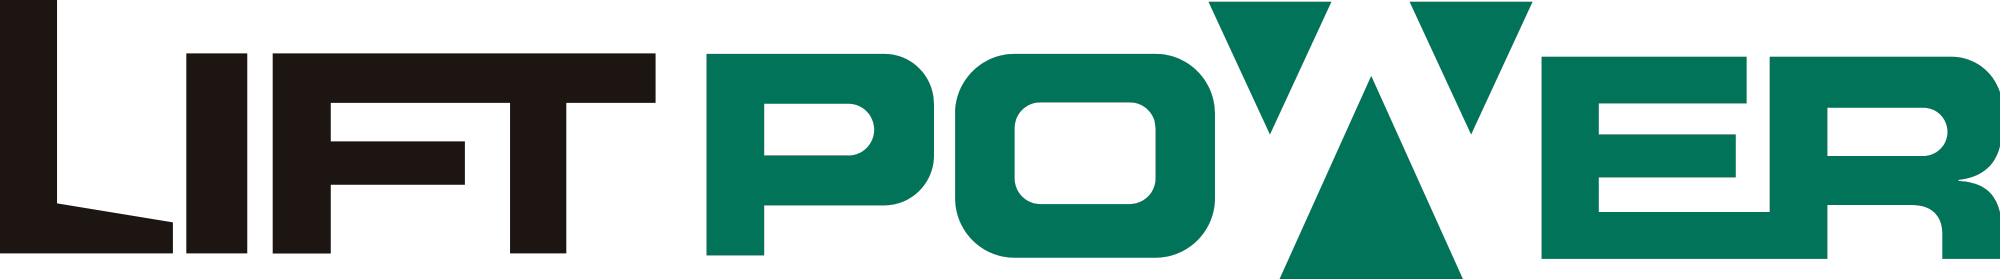 Lift power logo